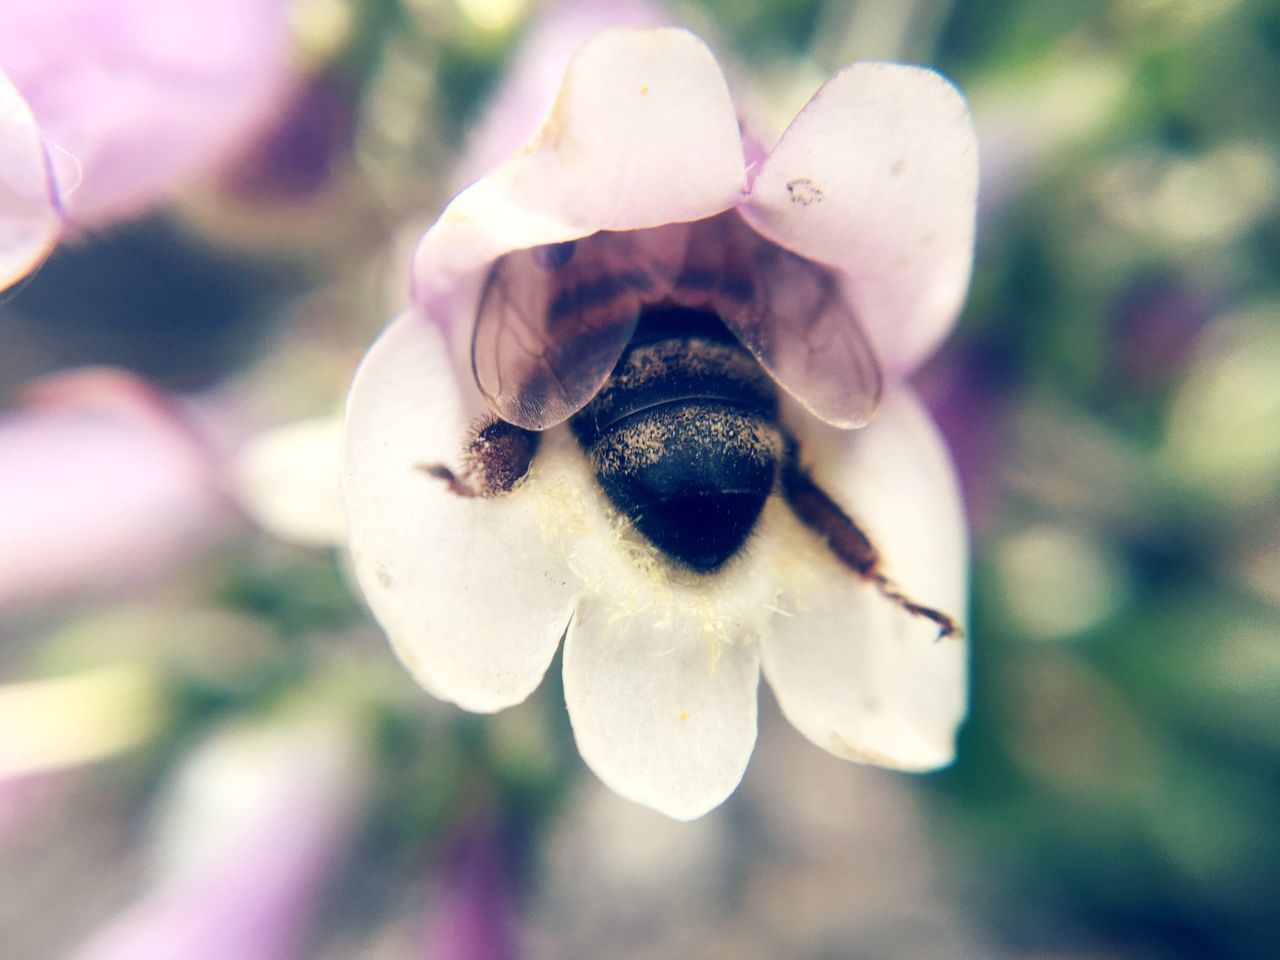 CLOSE-UP OF HONEY BEE ON FLOWER